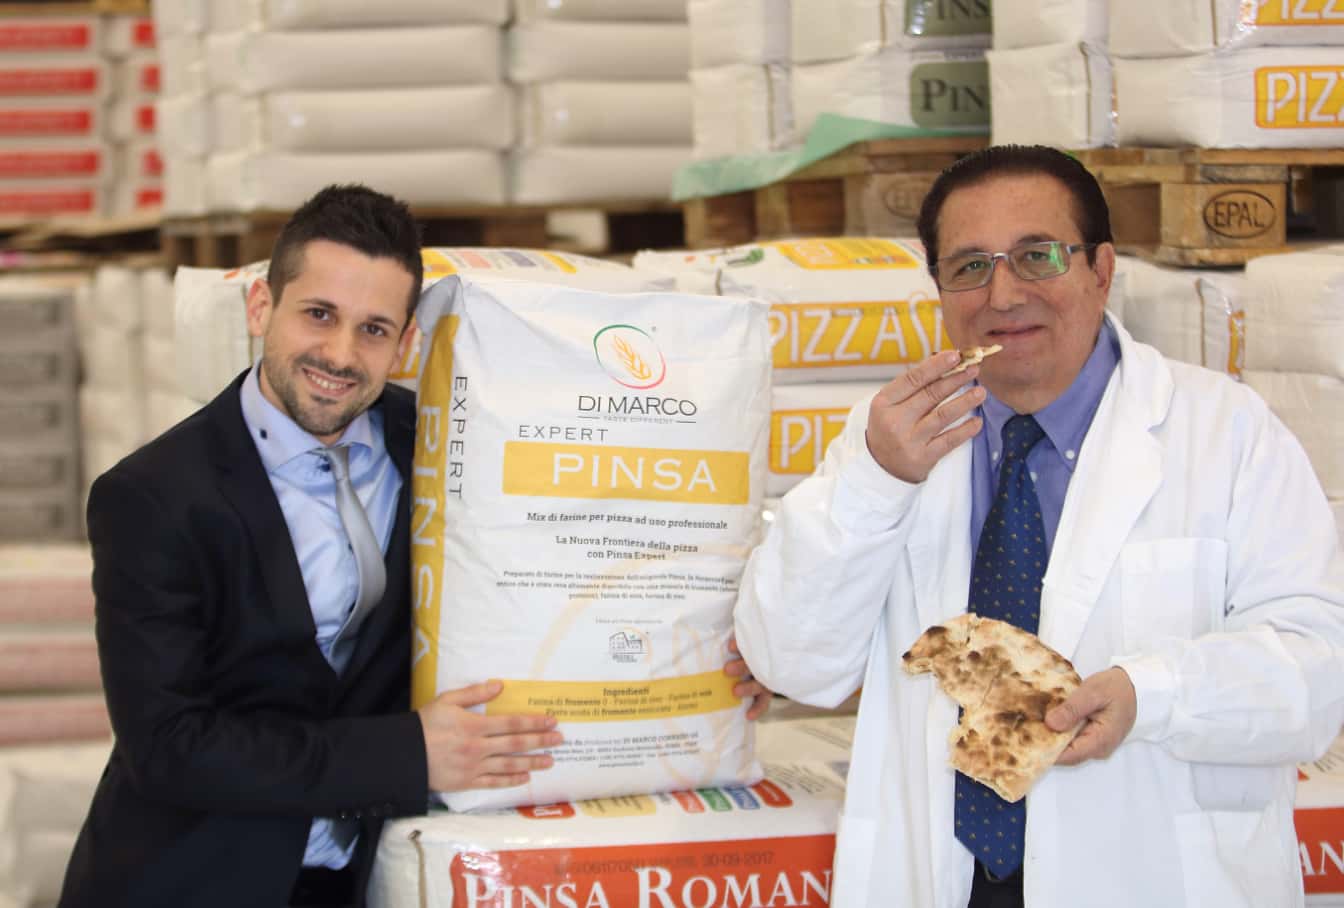 Photo of Corrado di Marco, with a staff member, tasting a piece of Pinsa